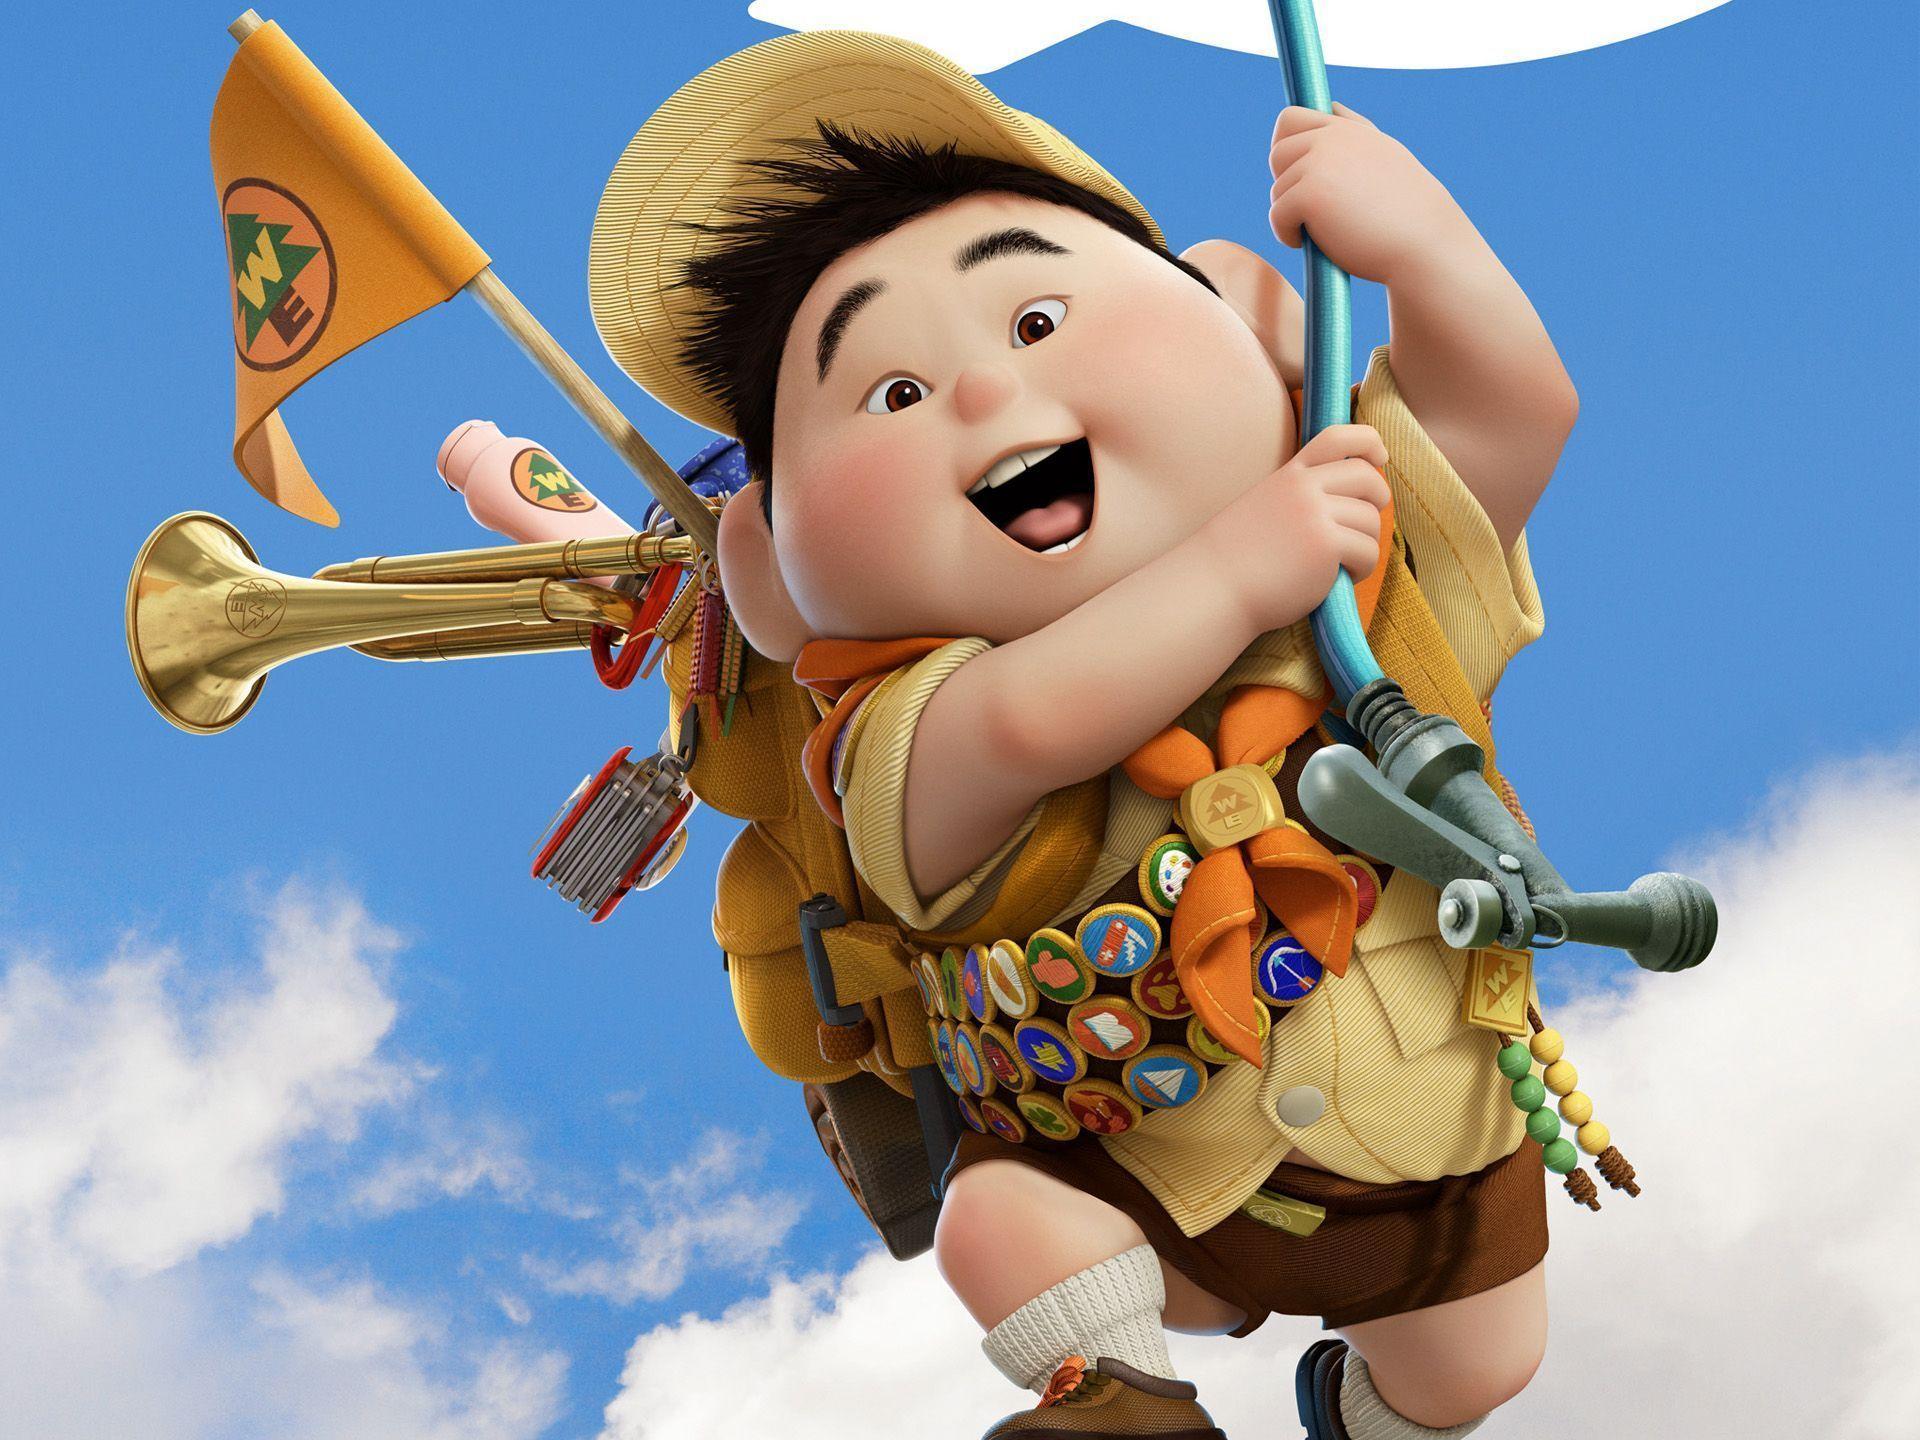 Russell Boy in Pixar&;s UP Wallpaper